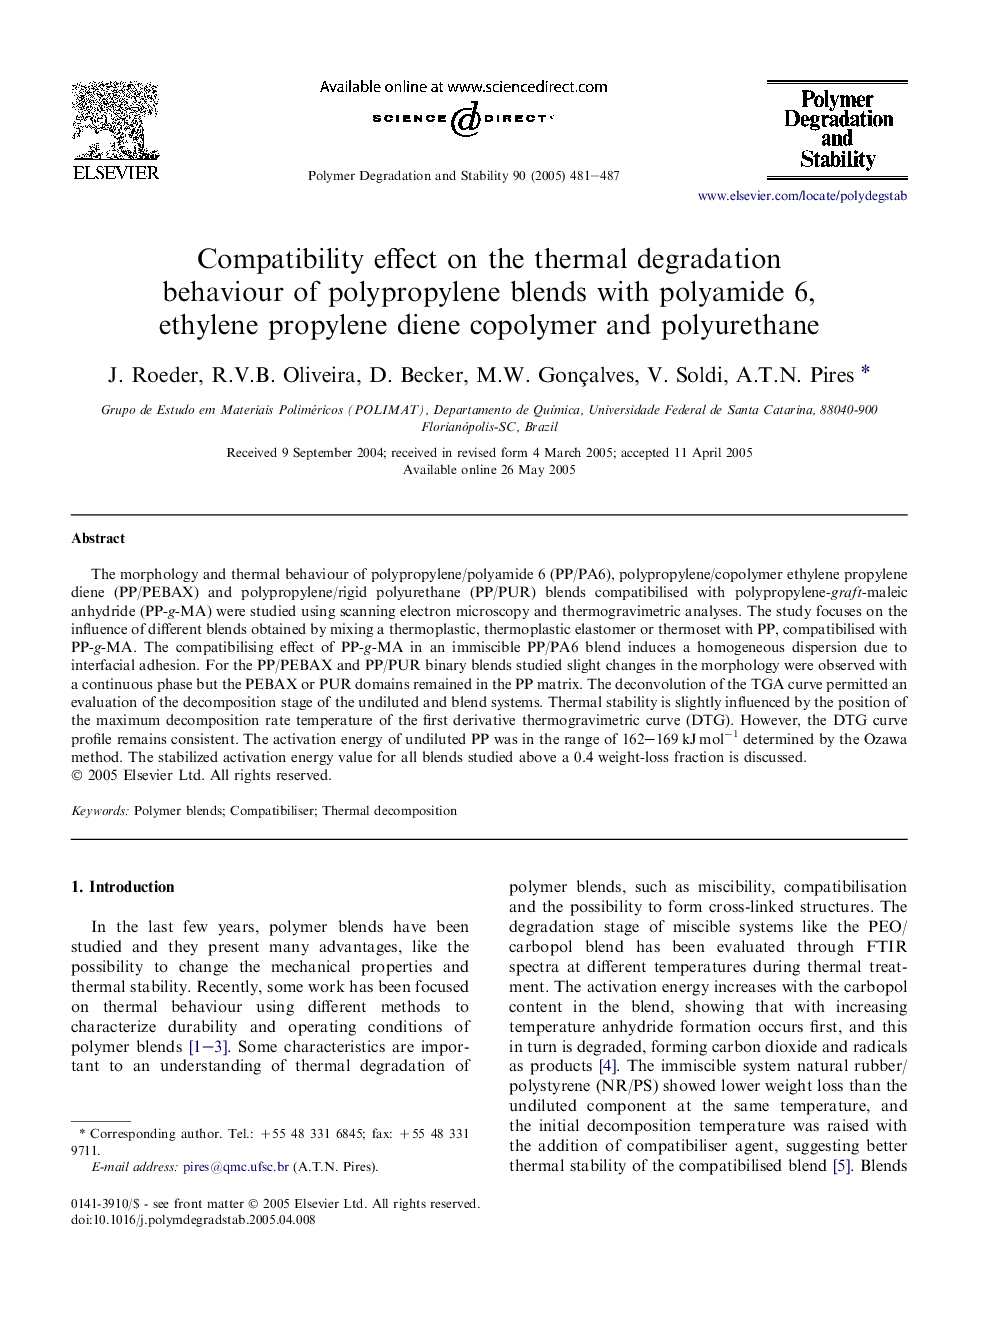 Compatibility effect on the thermal degradation behaviour of polypropylene blends with polyamide 6, ethylene propylene diene copolymer and polyurethane